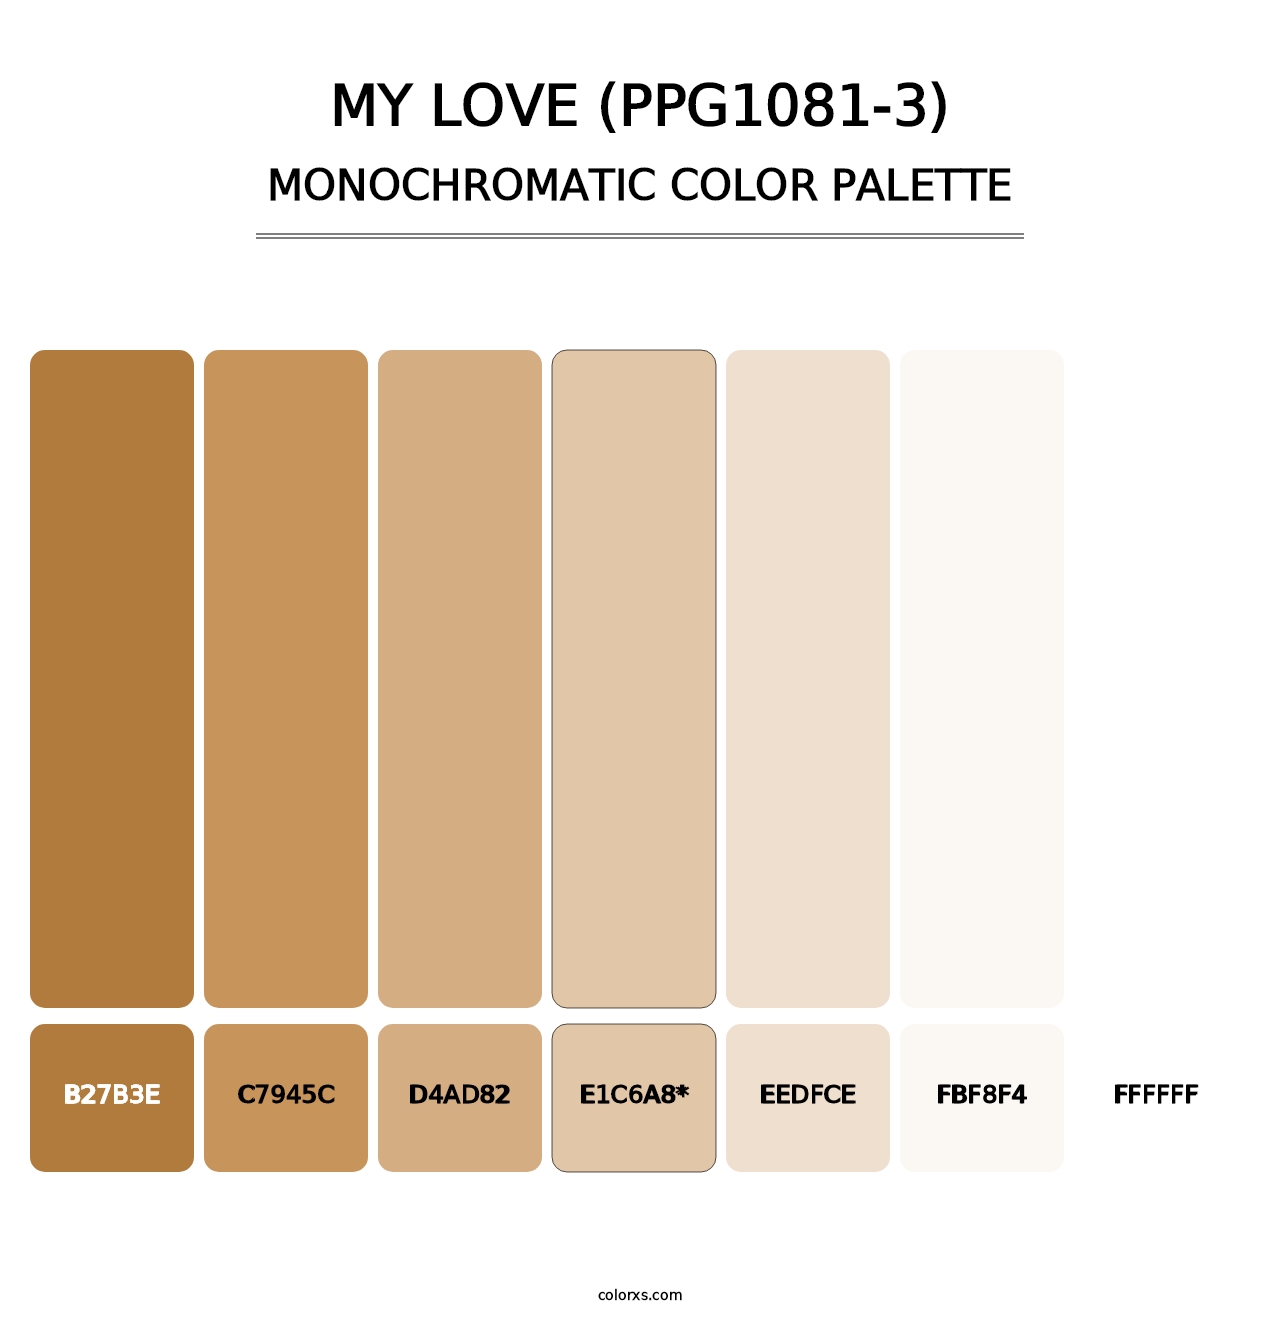 My Love (PPG1081-3) - Monochromatic Color Palette